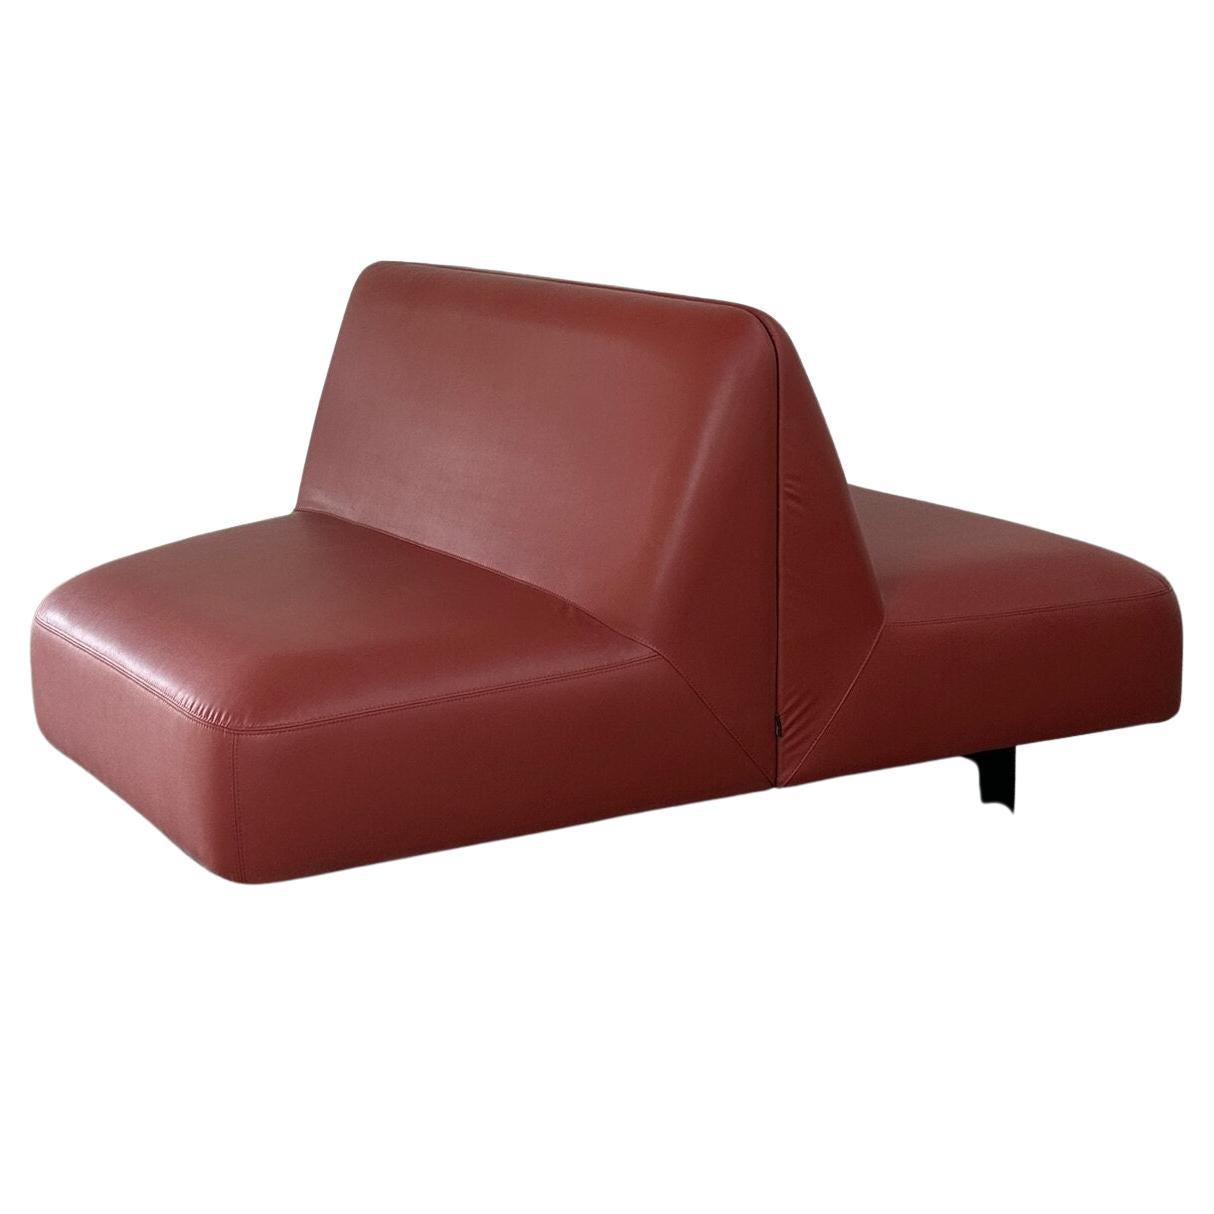 Custom Modular seating by Naughtone For Sale